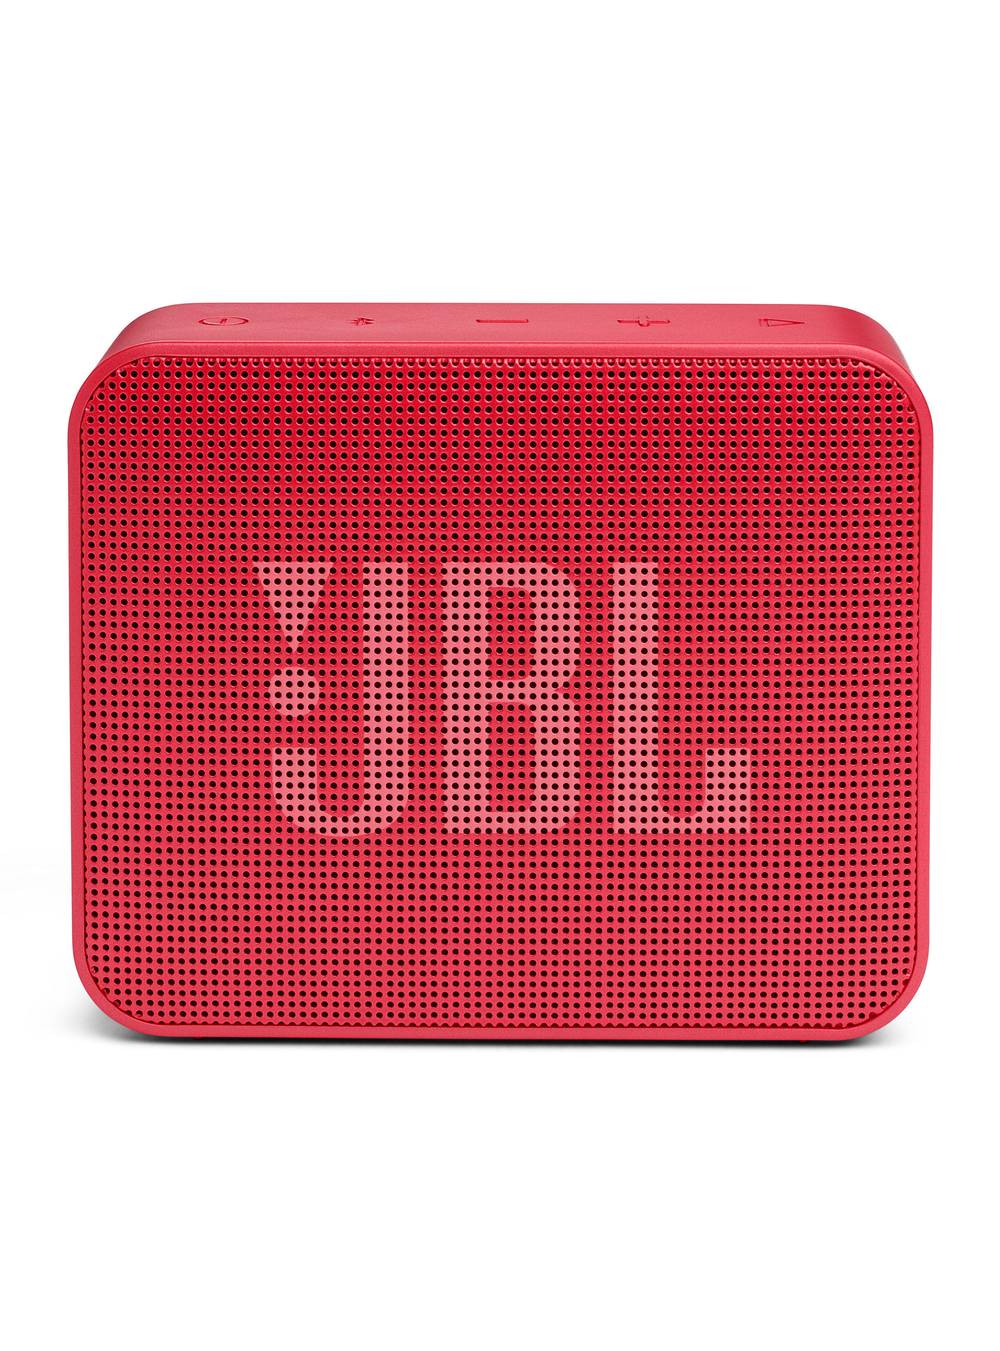 Jbl parlante bluetooth go essential red (1 u)